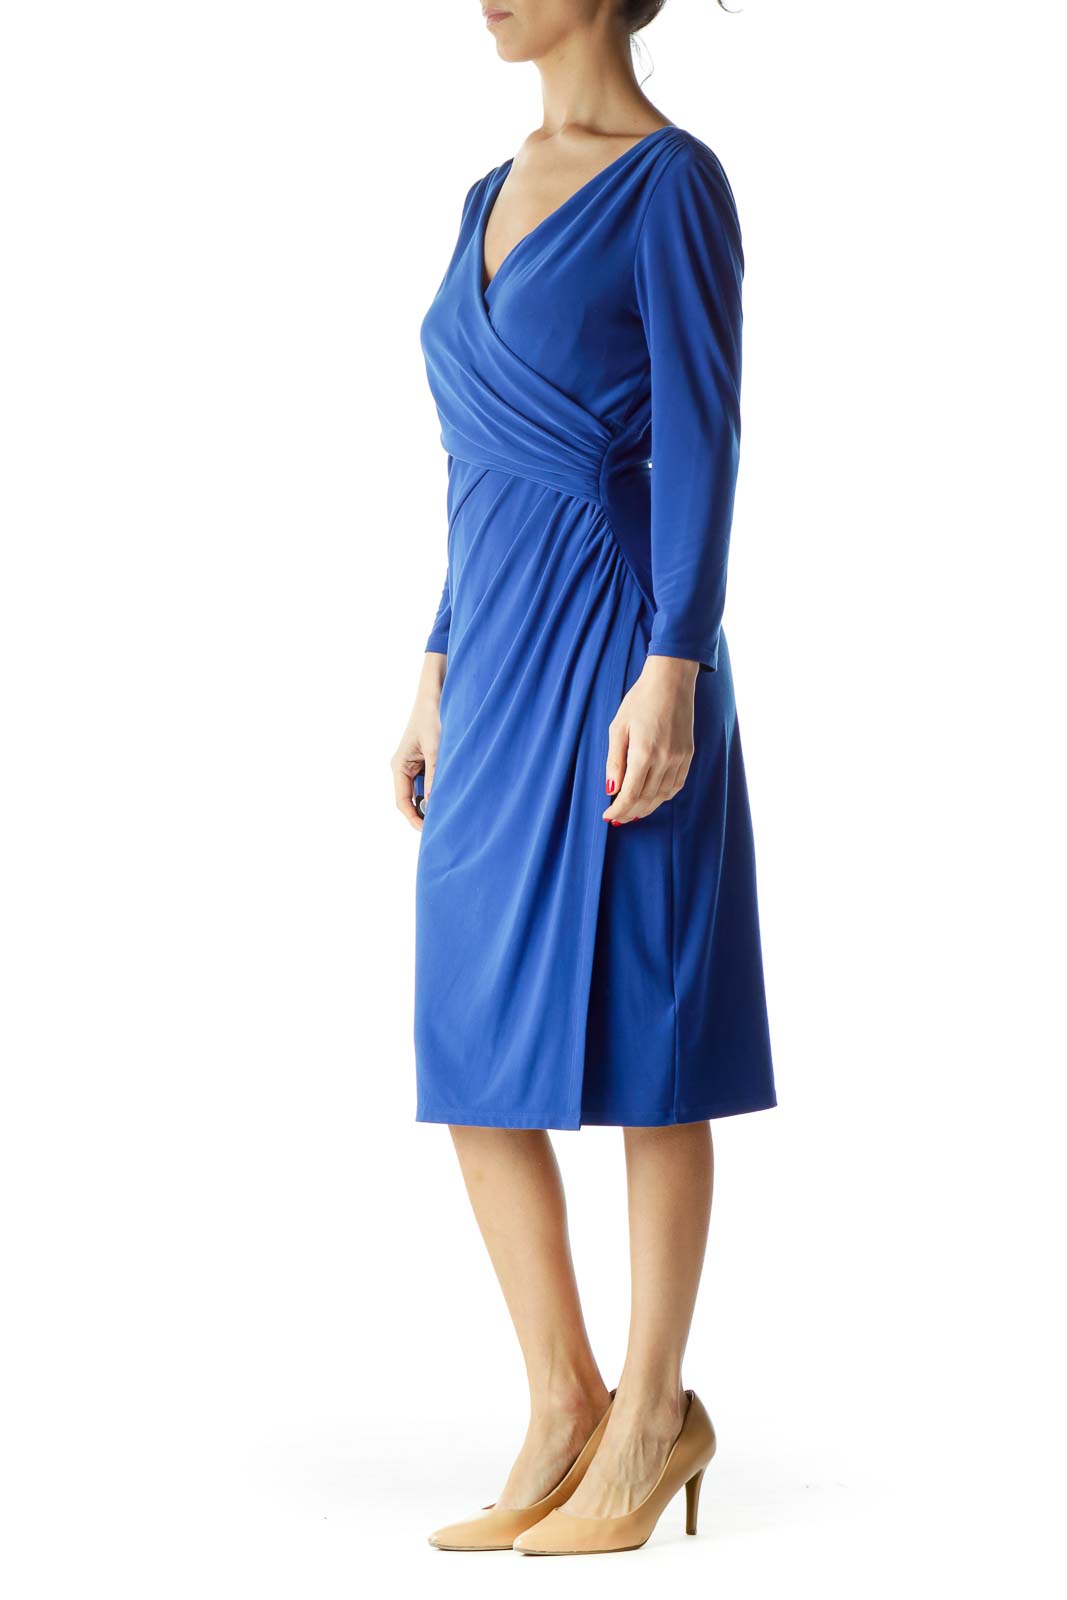 Lauren Ralph Lauren - Blue Ruched 3/4 Sleeve Dress Elastane